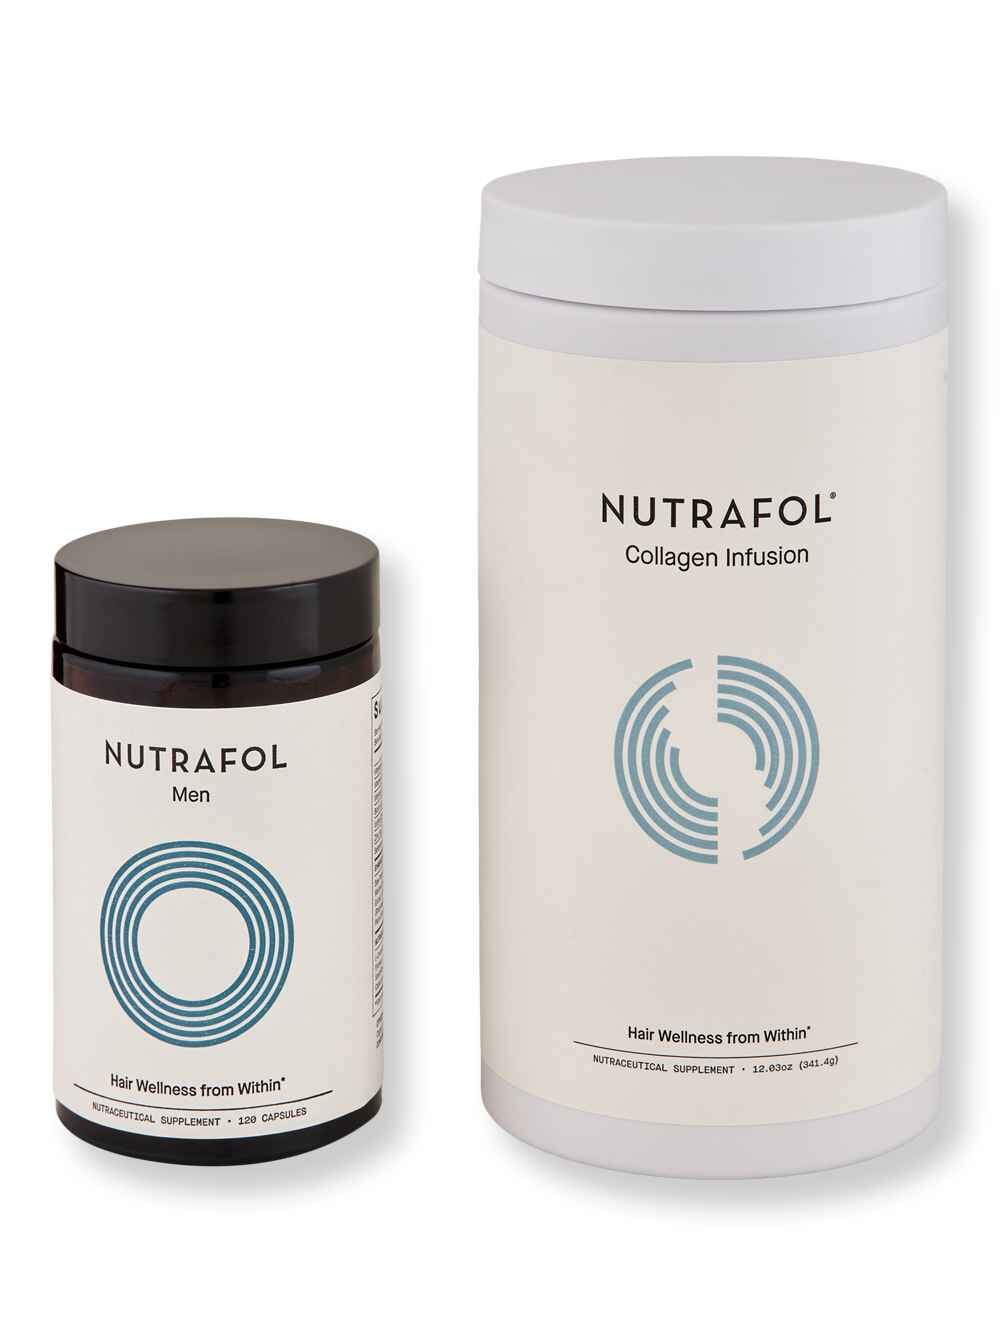 Nutrafol Nutrafol Men 1-month supply & Collagen Infusion 12.03 oz Wellness Supplements 